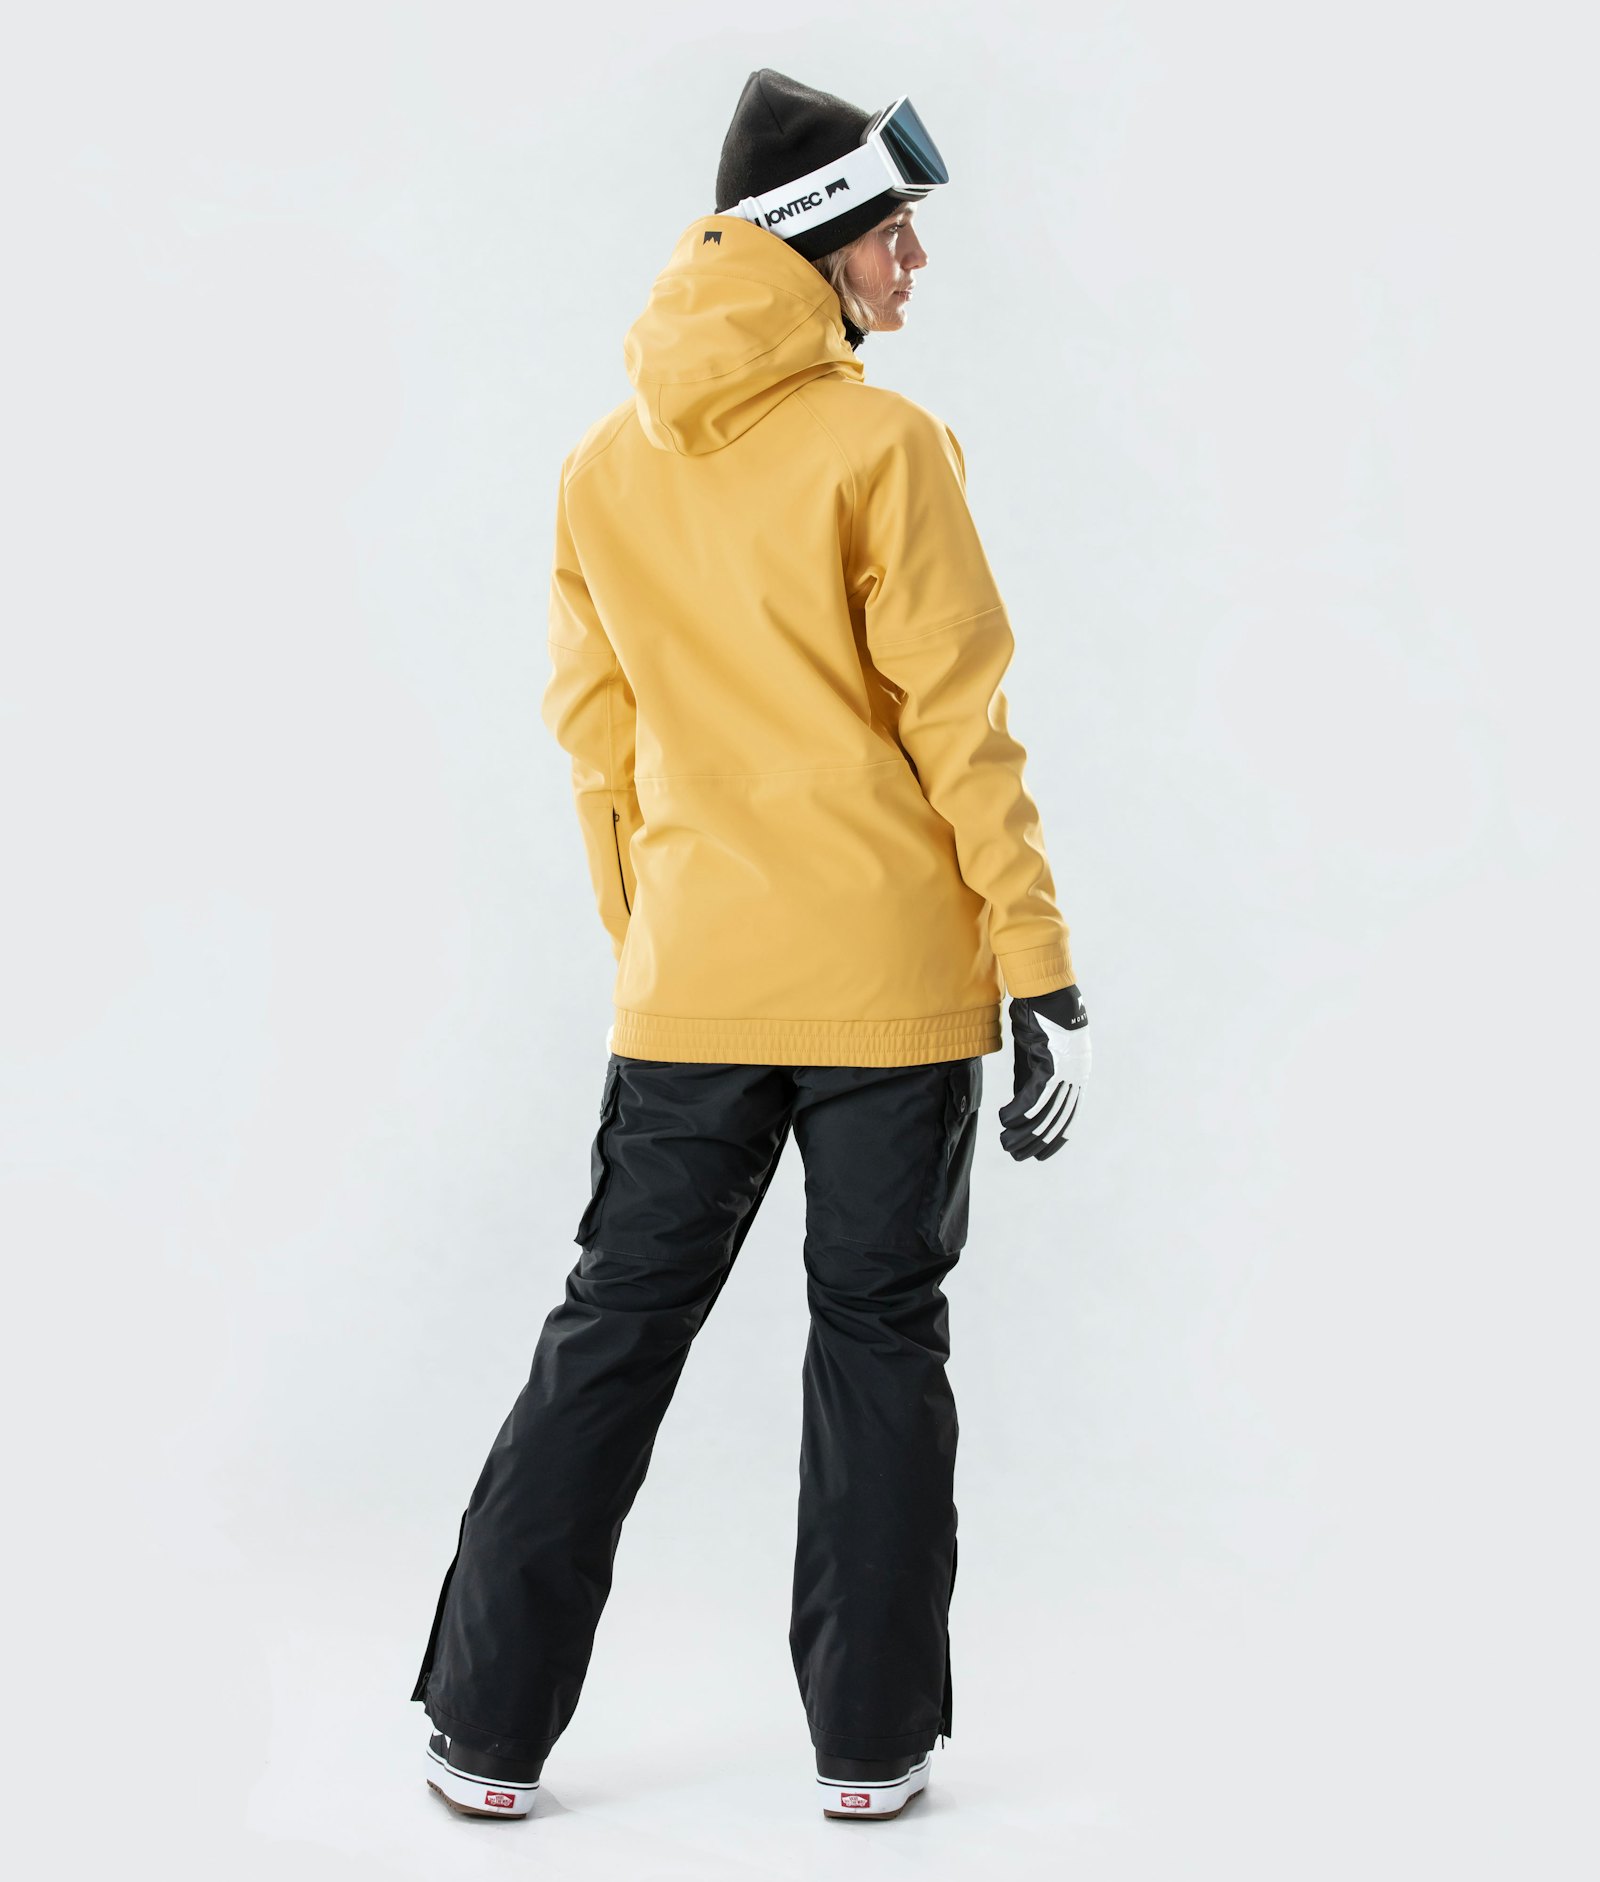 Tempest W 2020 Snowboard Jacket Women Yellow Renewed, Image 9 of 9